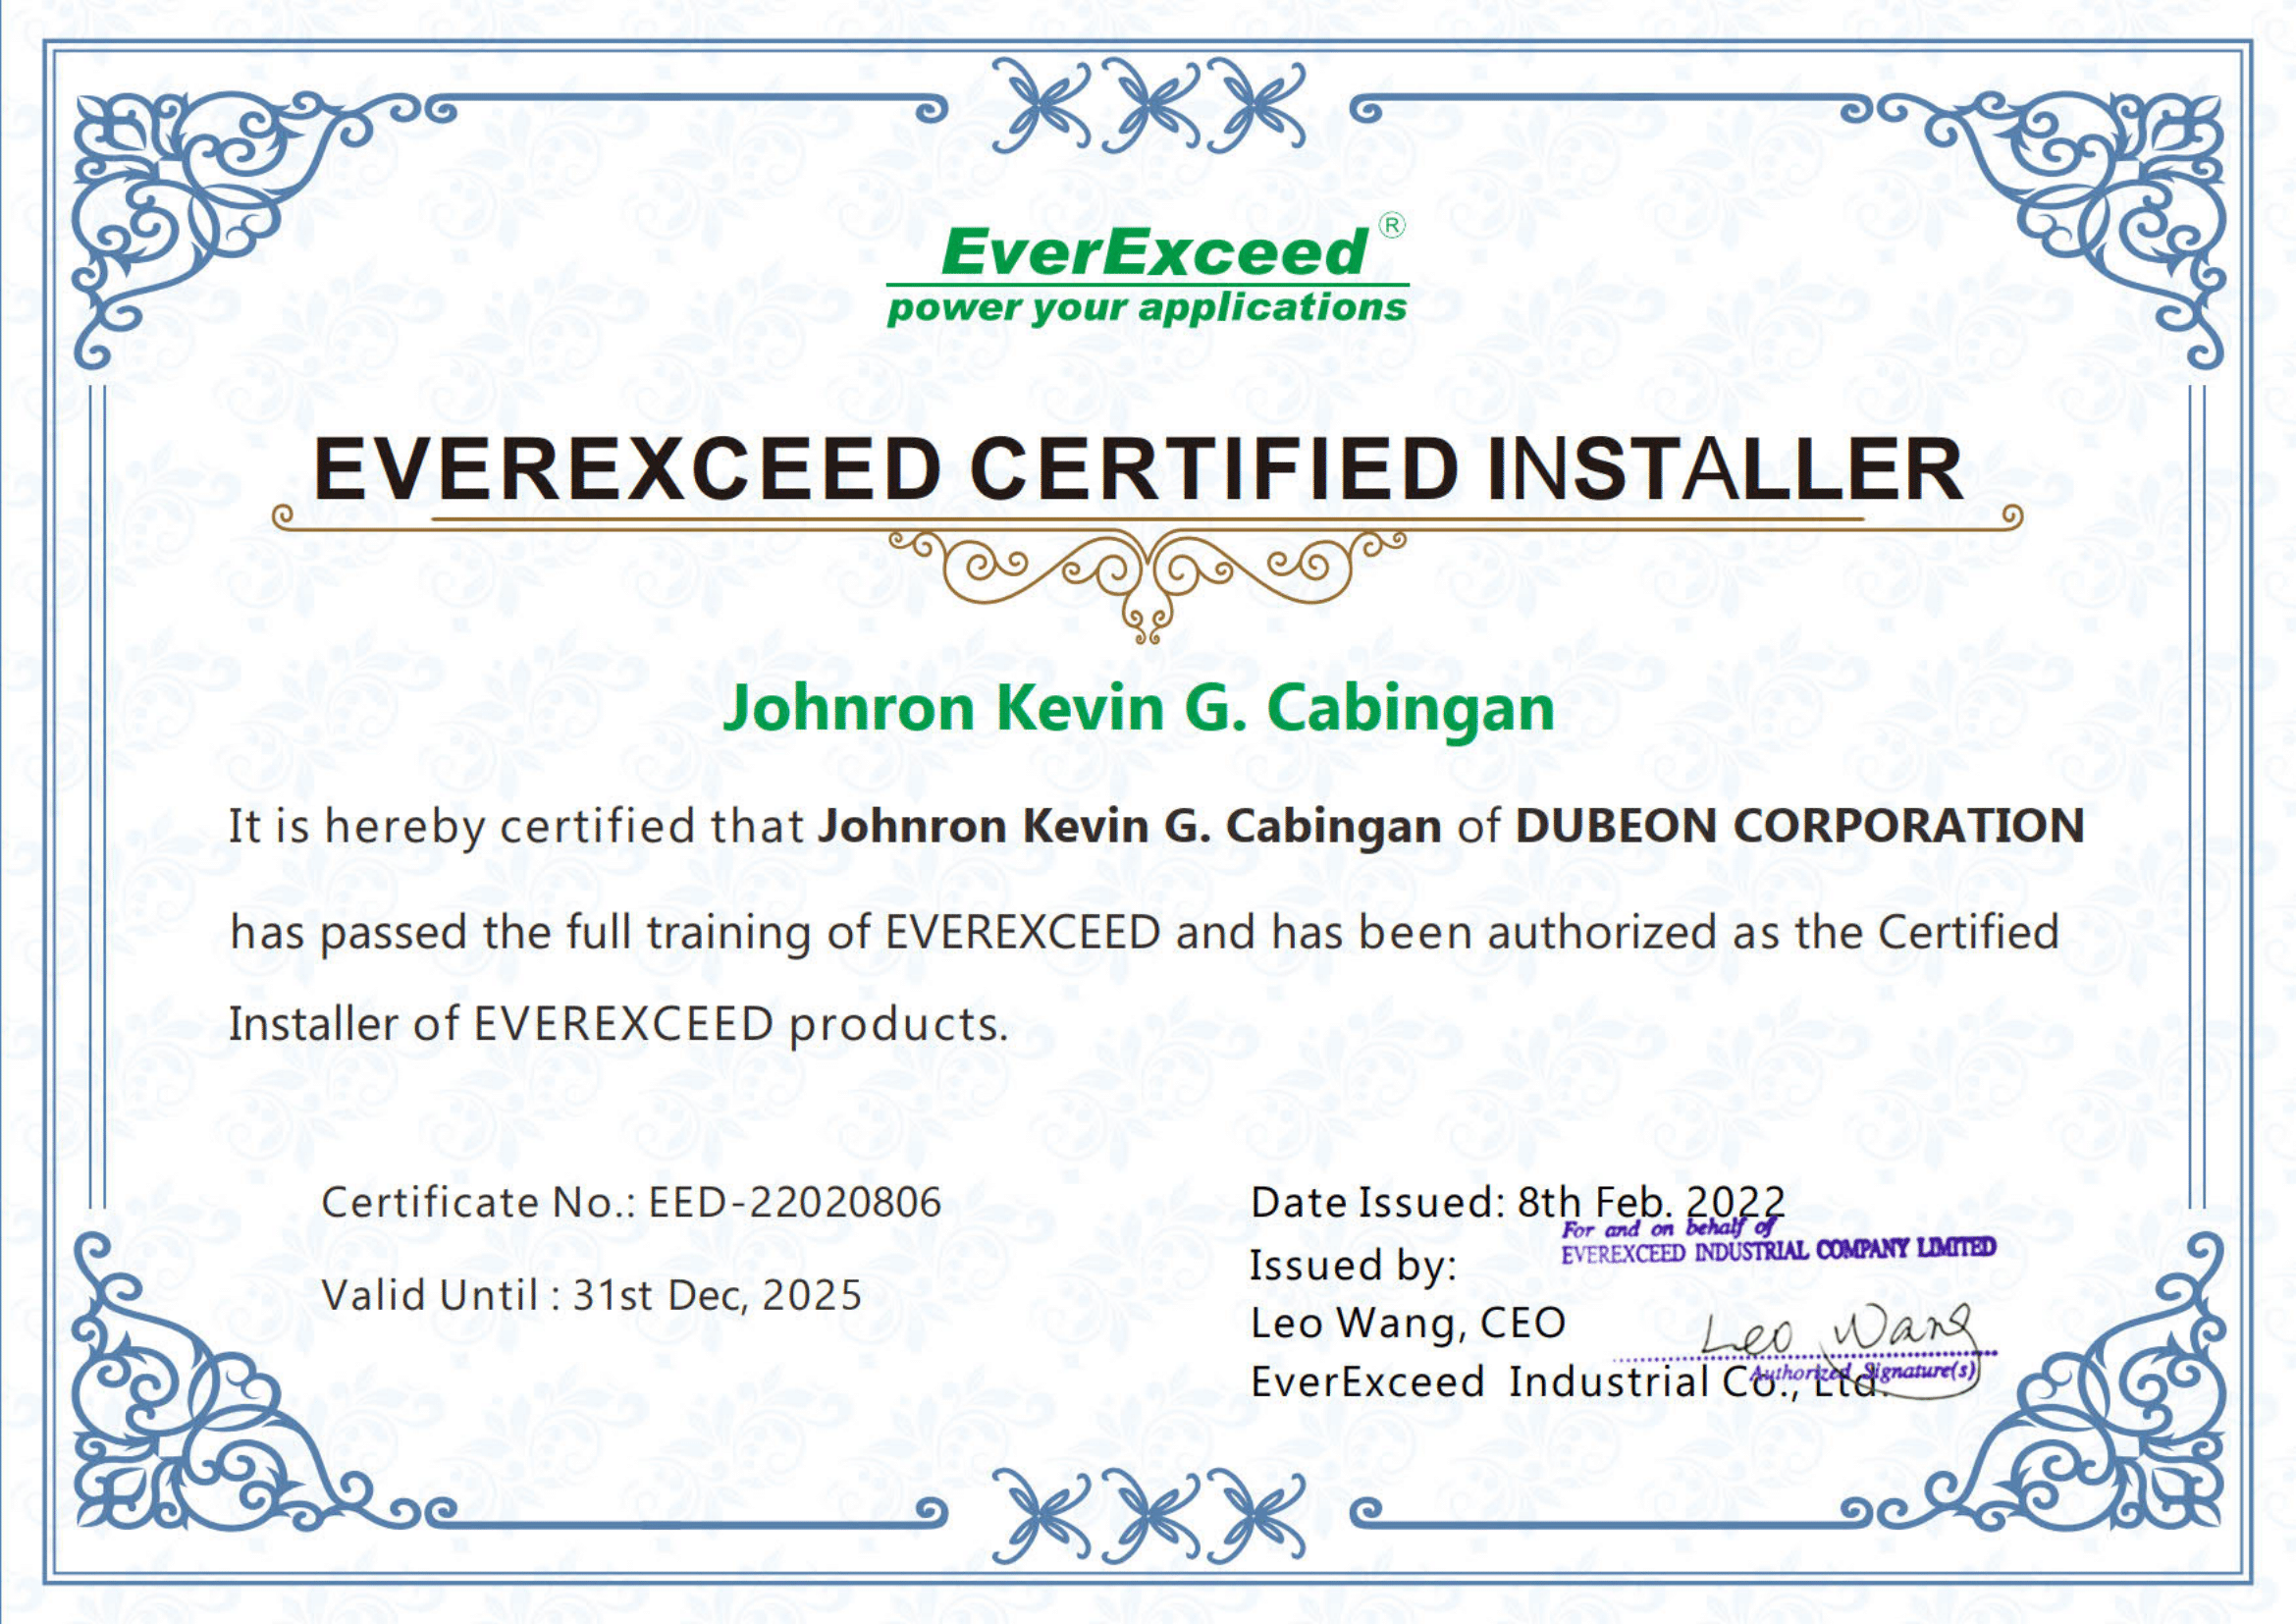 Certified Installer - Dubeon - Johnron Kevin G. Cabingan_1-1.png